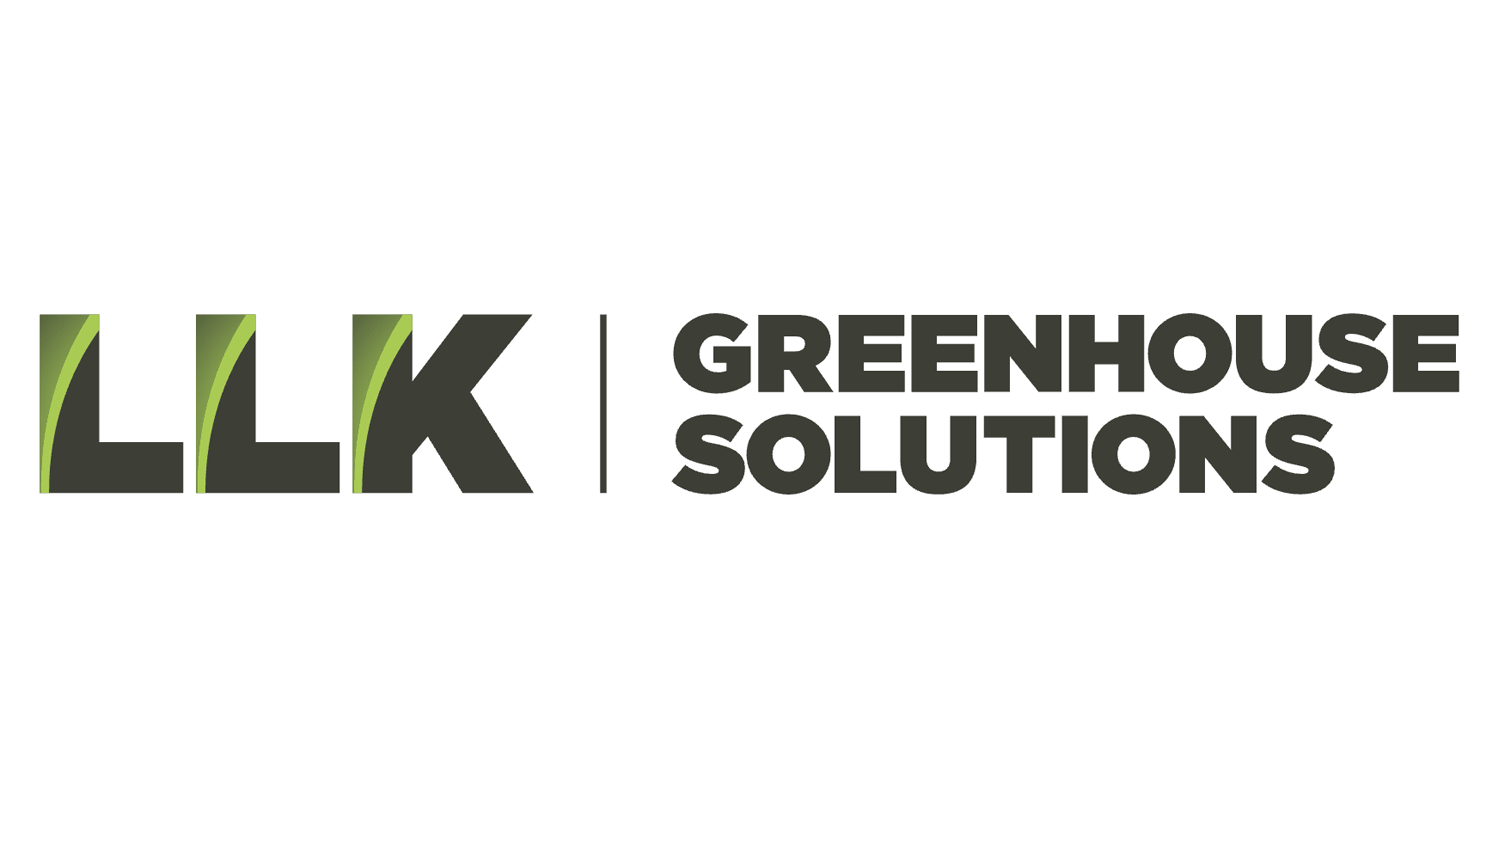 LLK Greenhouse Solutions